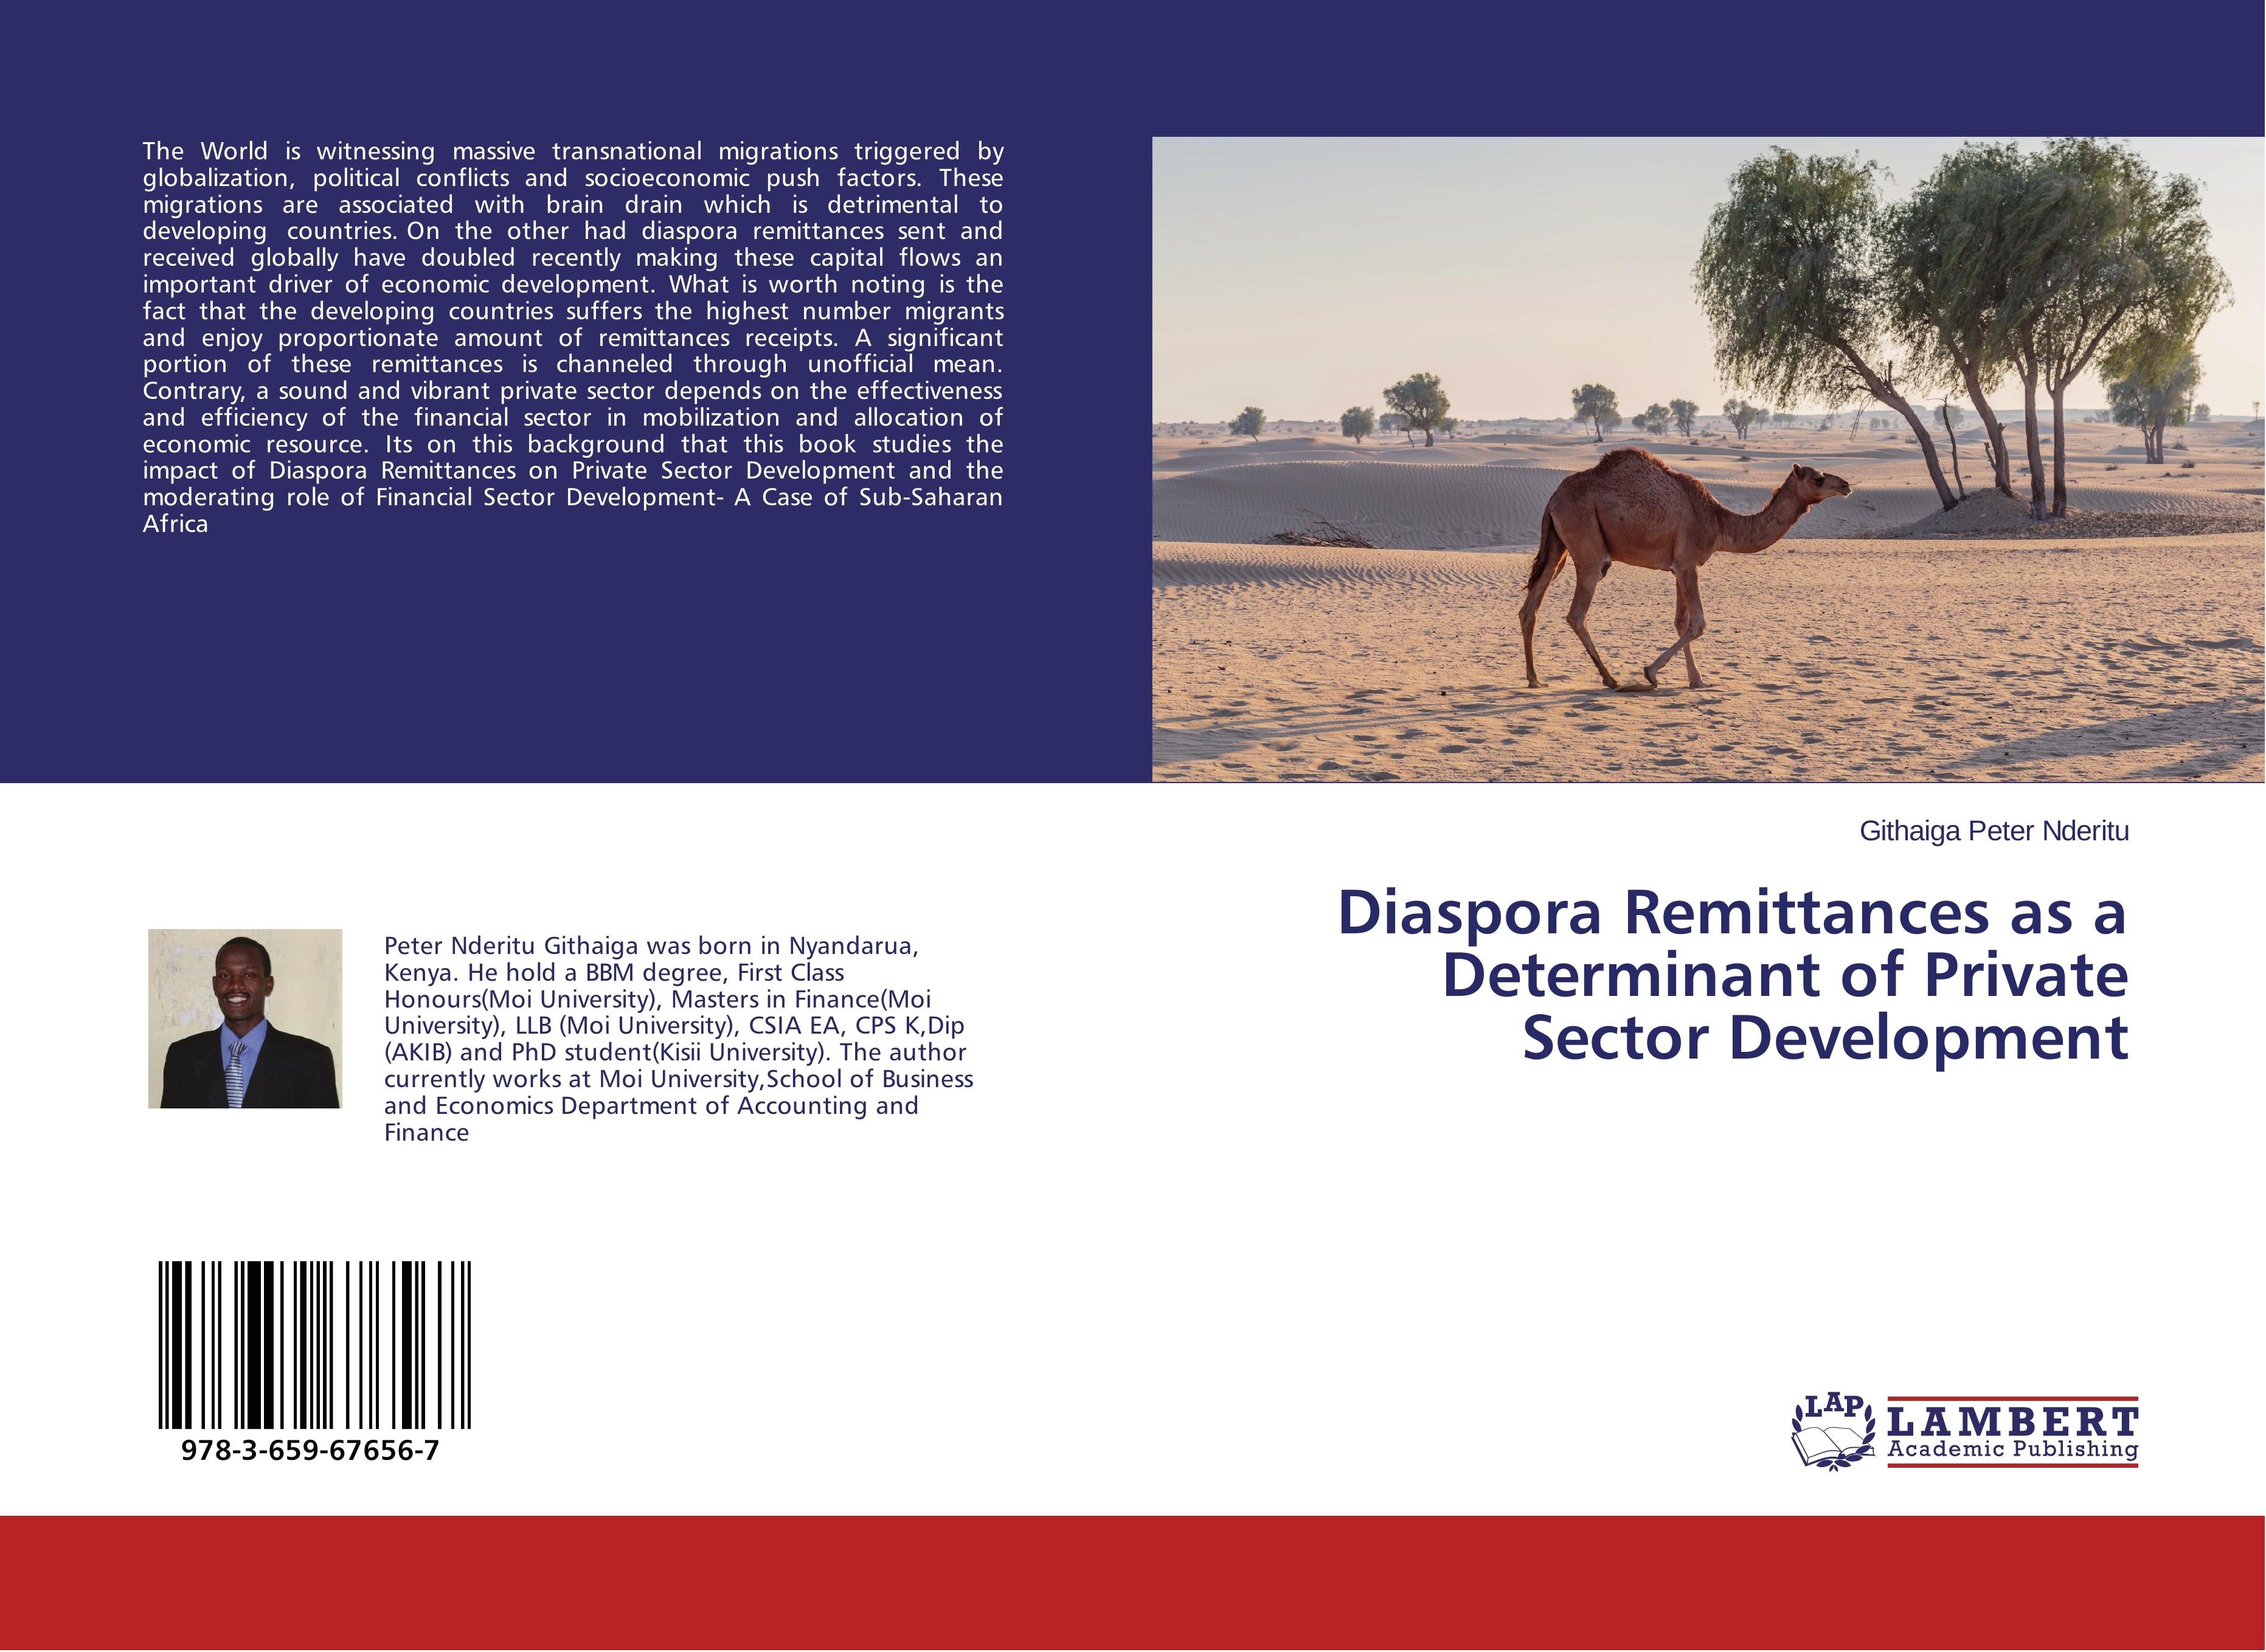 Diaspora Remittances as a Determinant of Private Sector Development - Githaiga Peter Nderitu